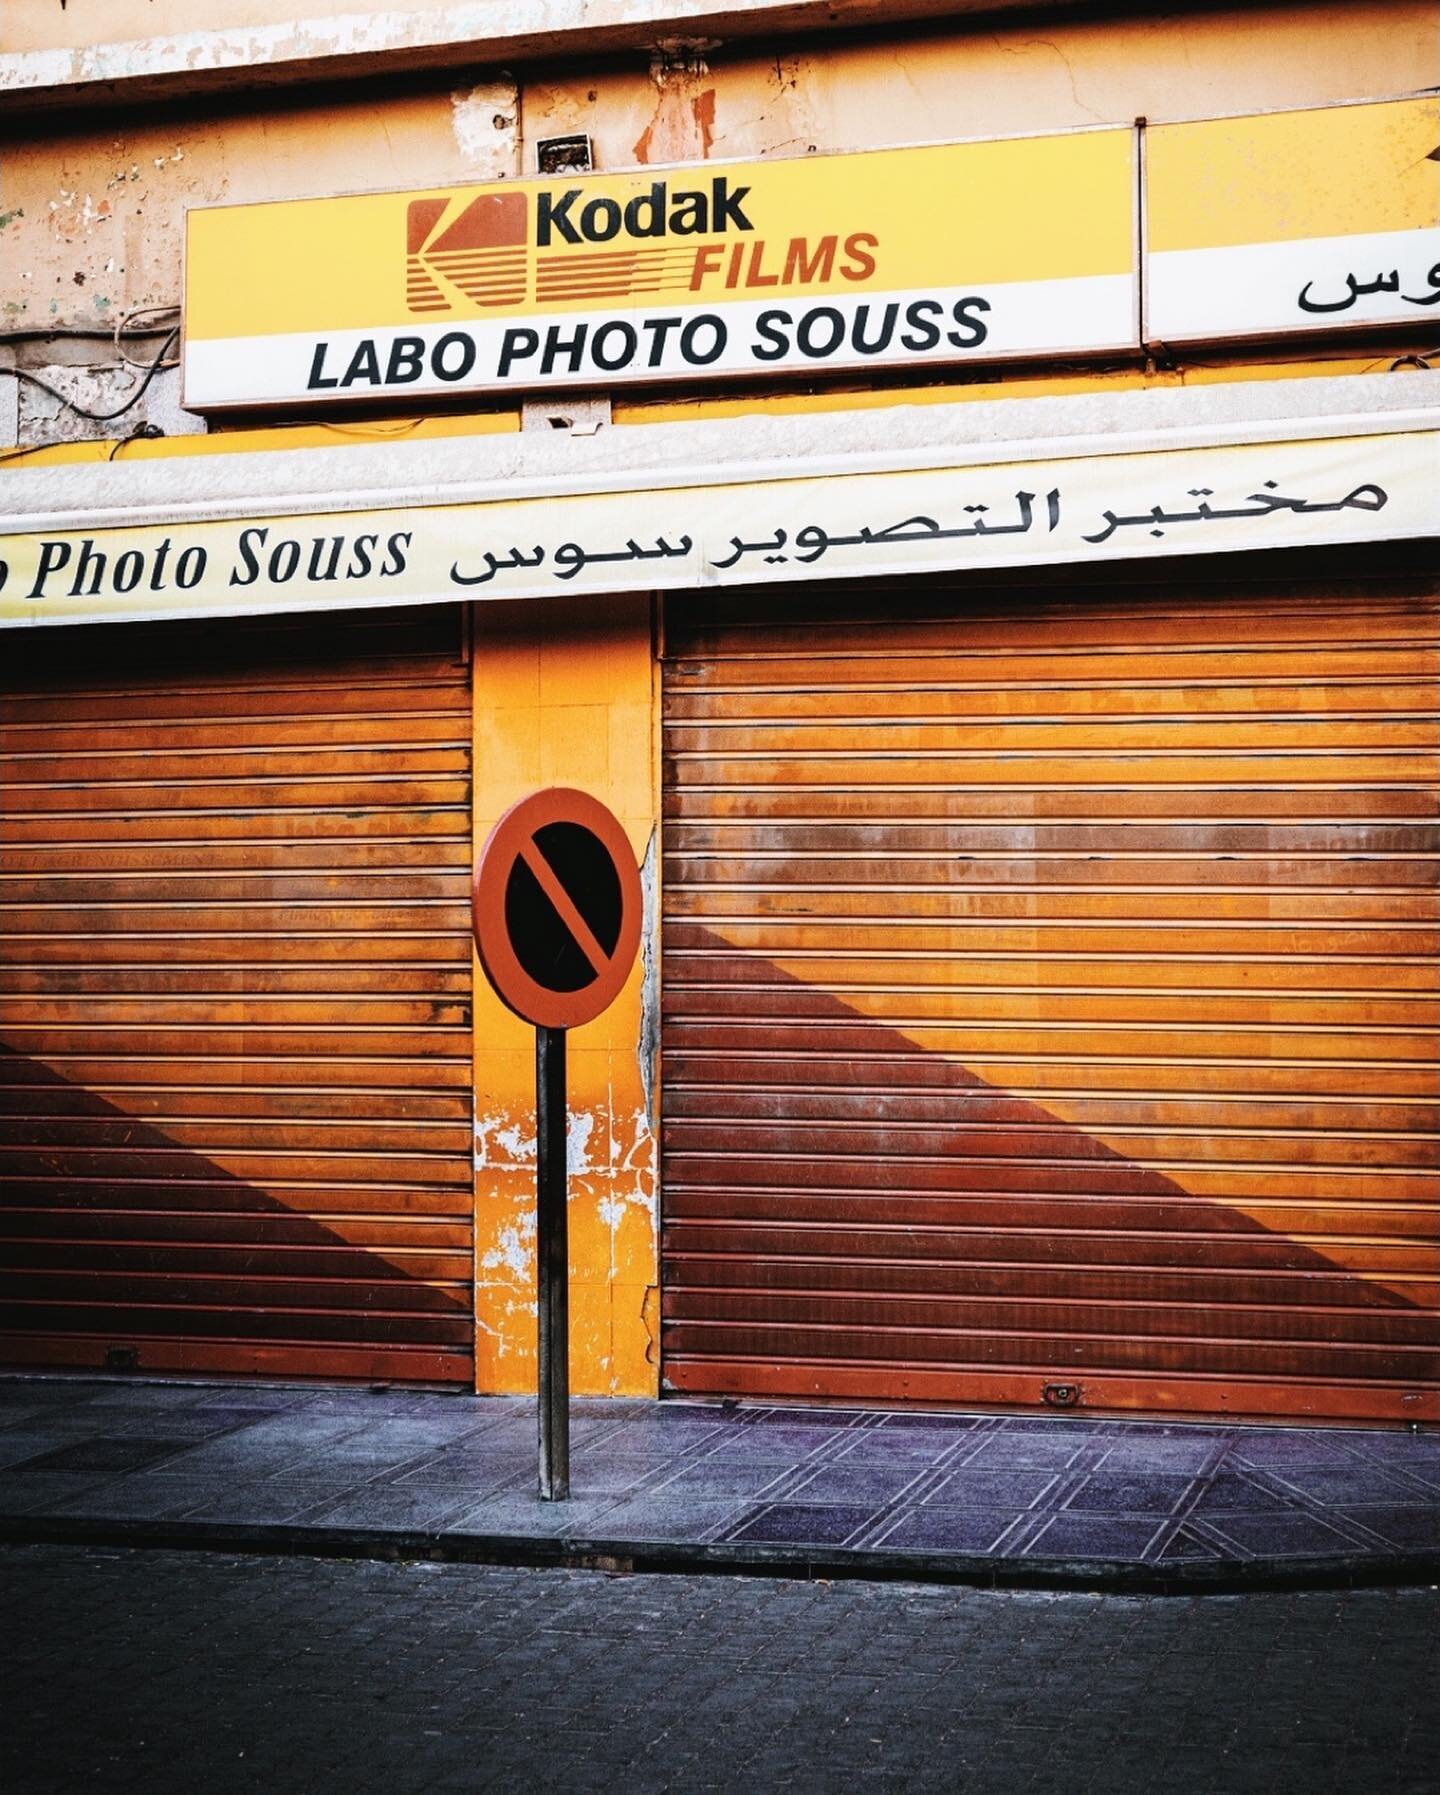 Photographie dans les rues endormies de Taroudant, aussi surnomm&eacute;e la petite Marrakech. // Photography in the sleepy streets of Taroudant, also nicknamed the little Marrakech.

@terresdaventure @gosselinphoto #taroudant #maroc #morocco